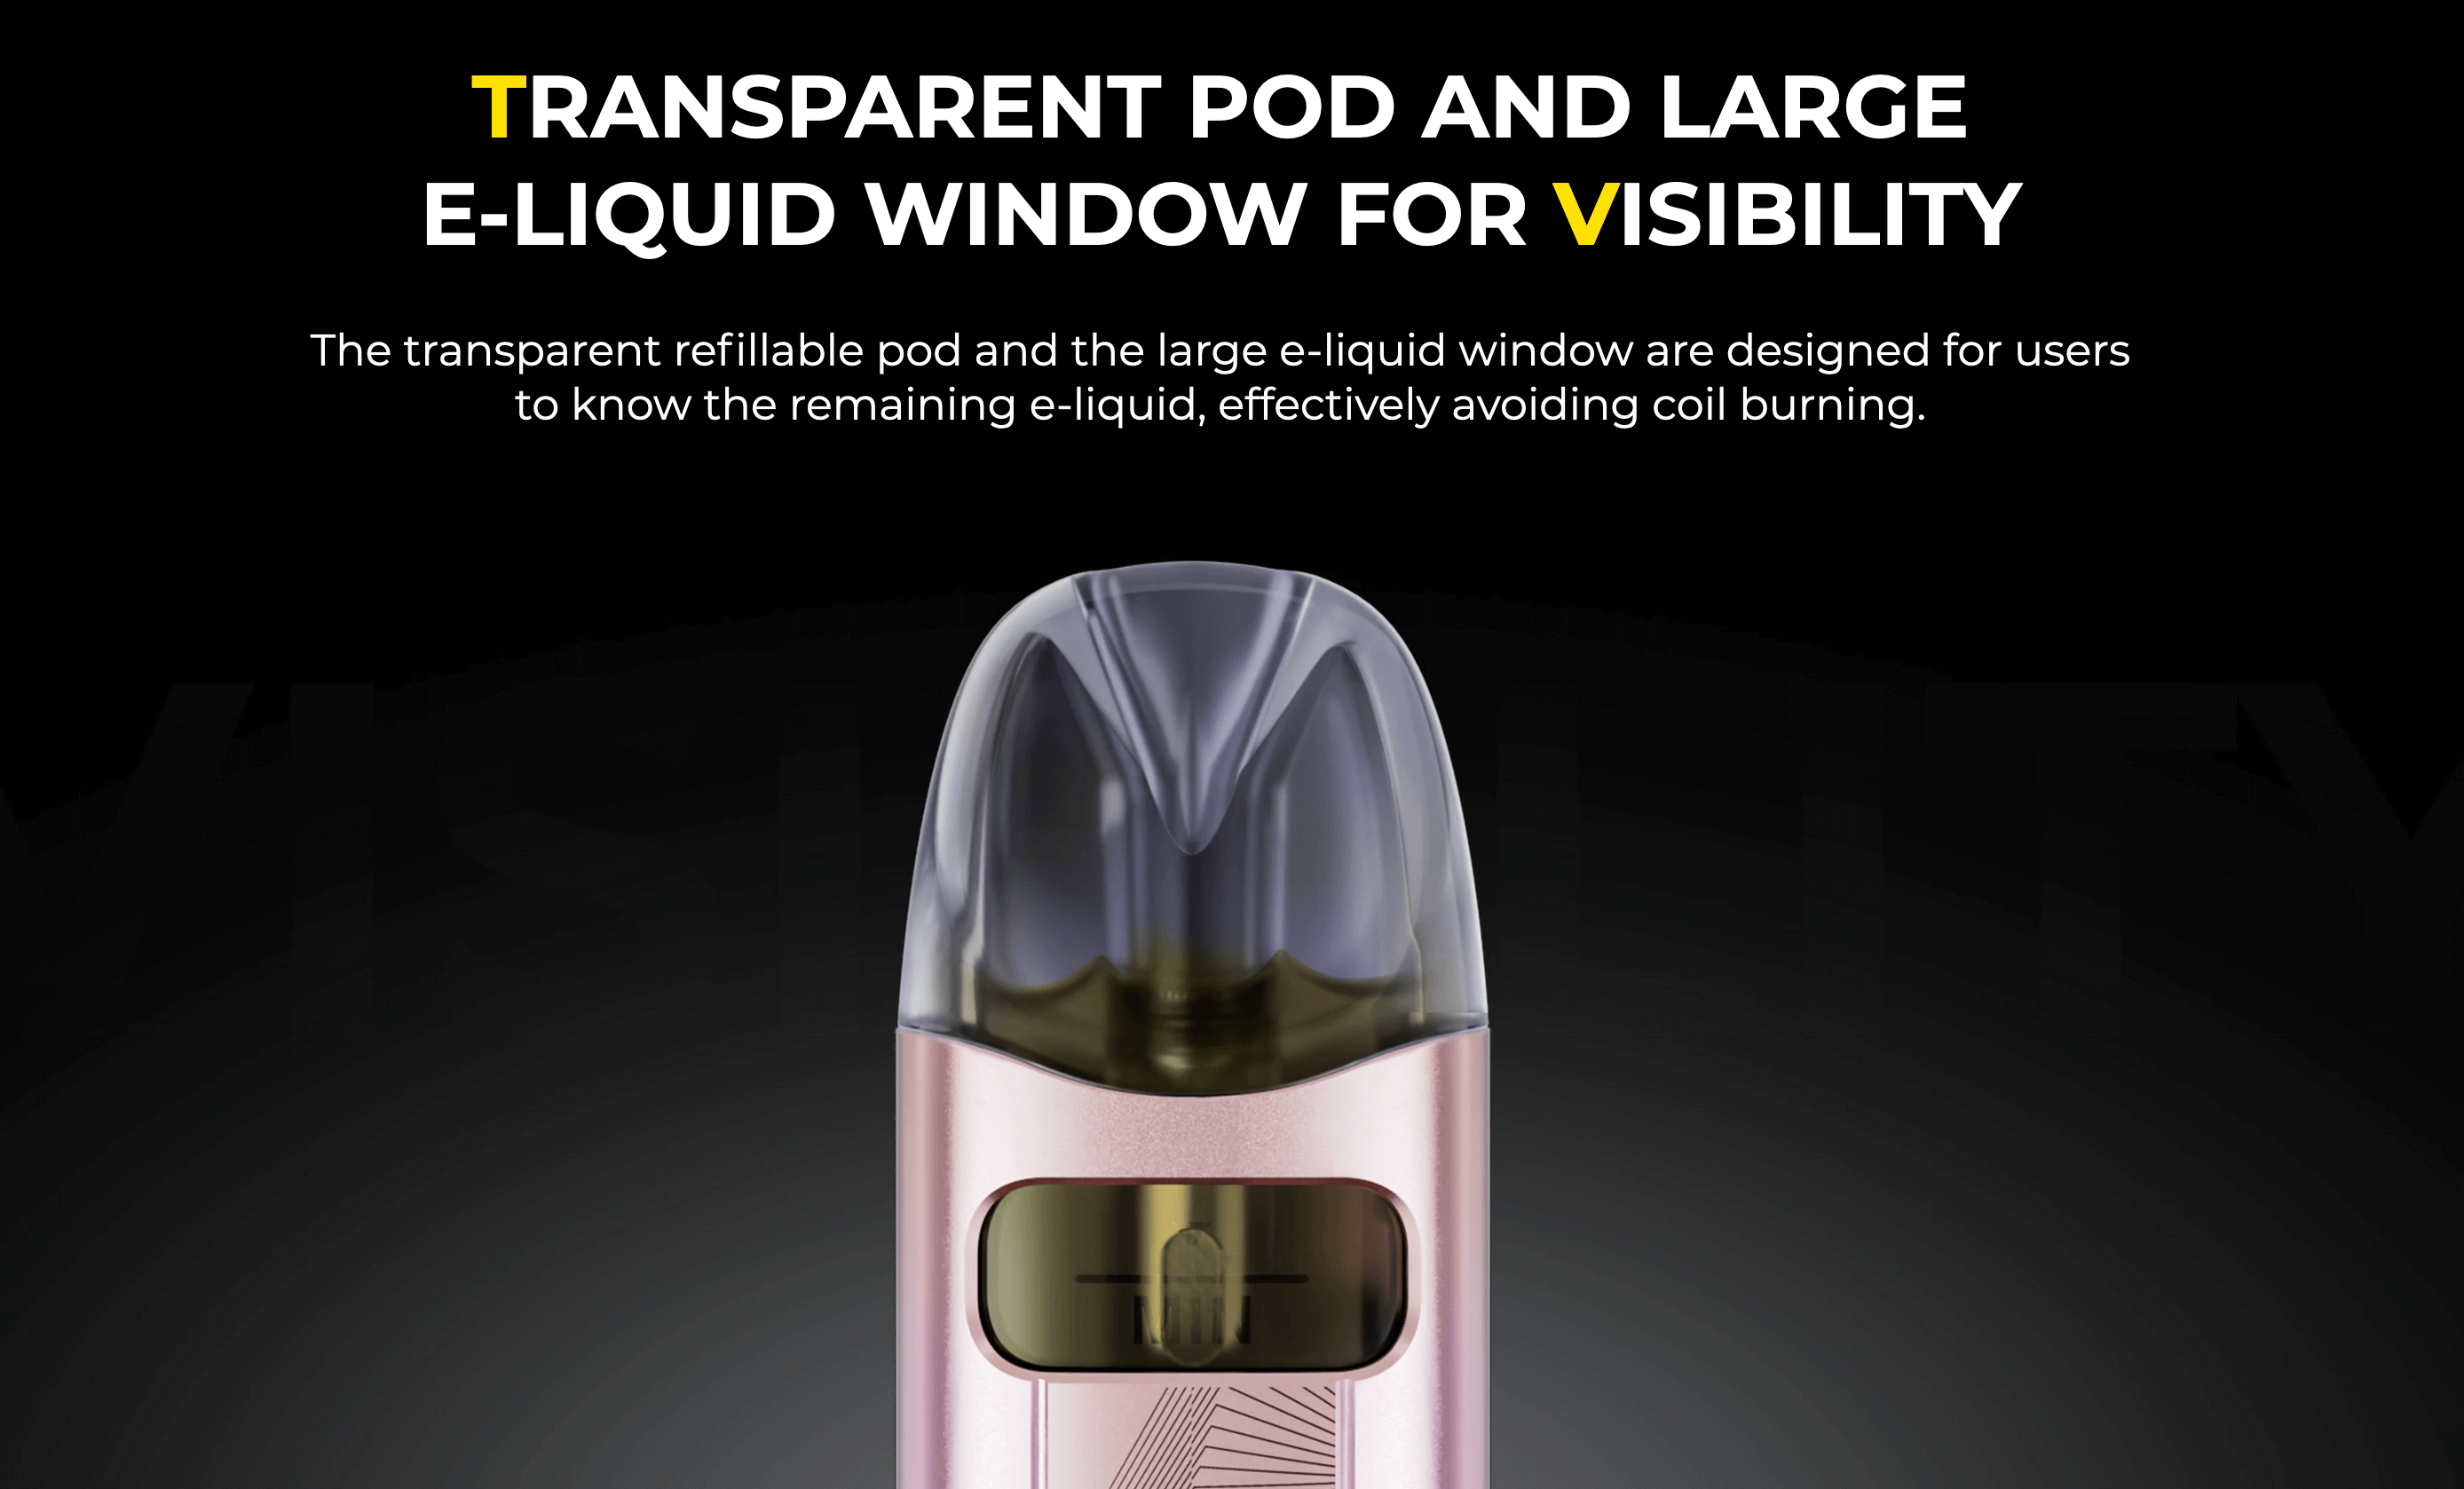 Caliburn A3S Pod Vape Kit by Uwell - transparent pod and large liquid visibility window